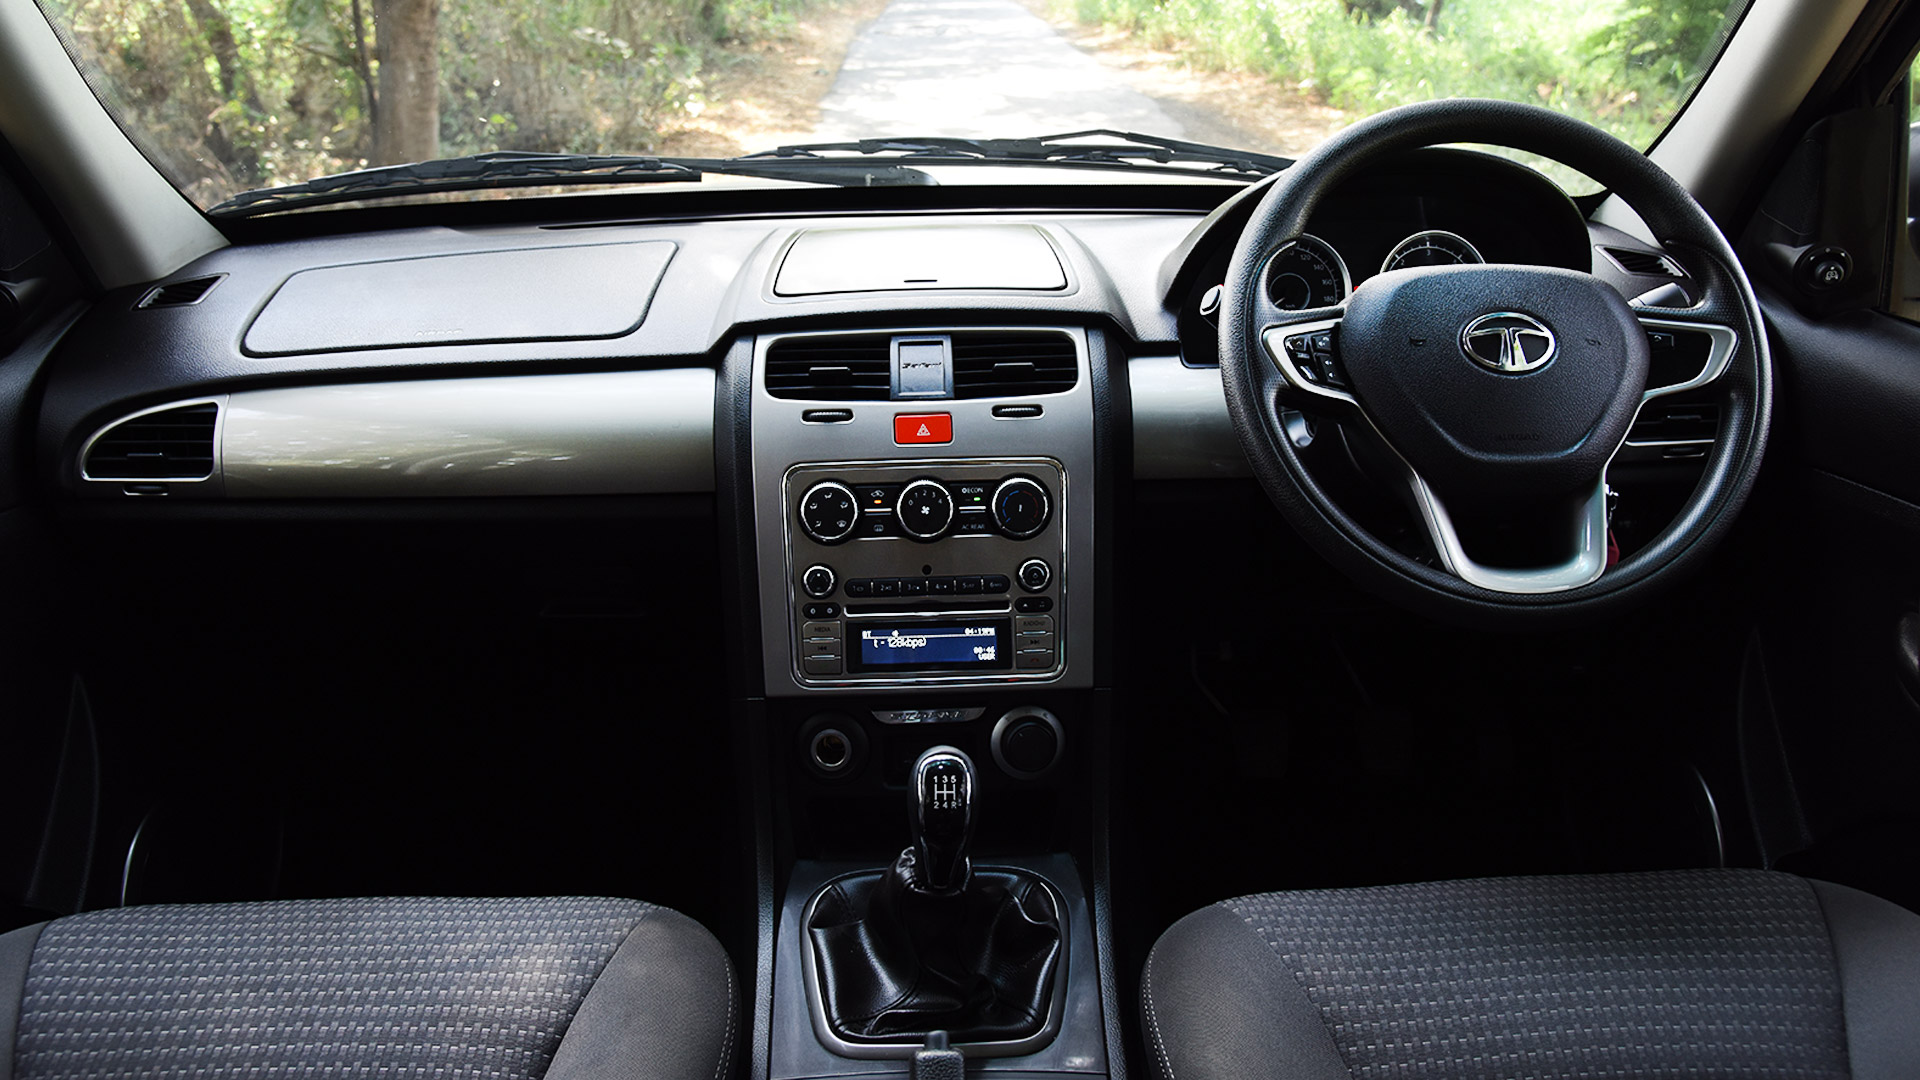 Tata Safari Storme 2015 Vx Bs4 4x4 Interior Car Photos